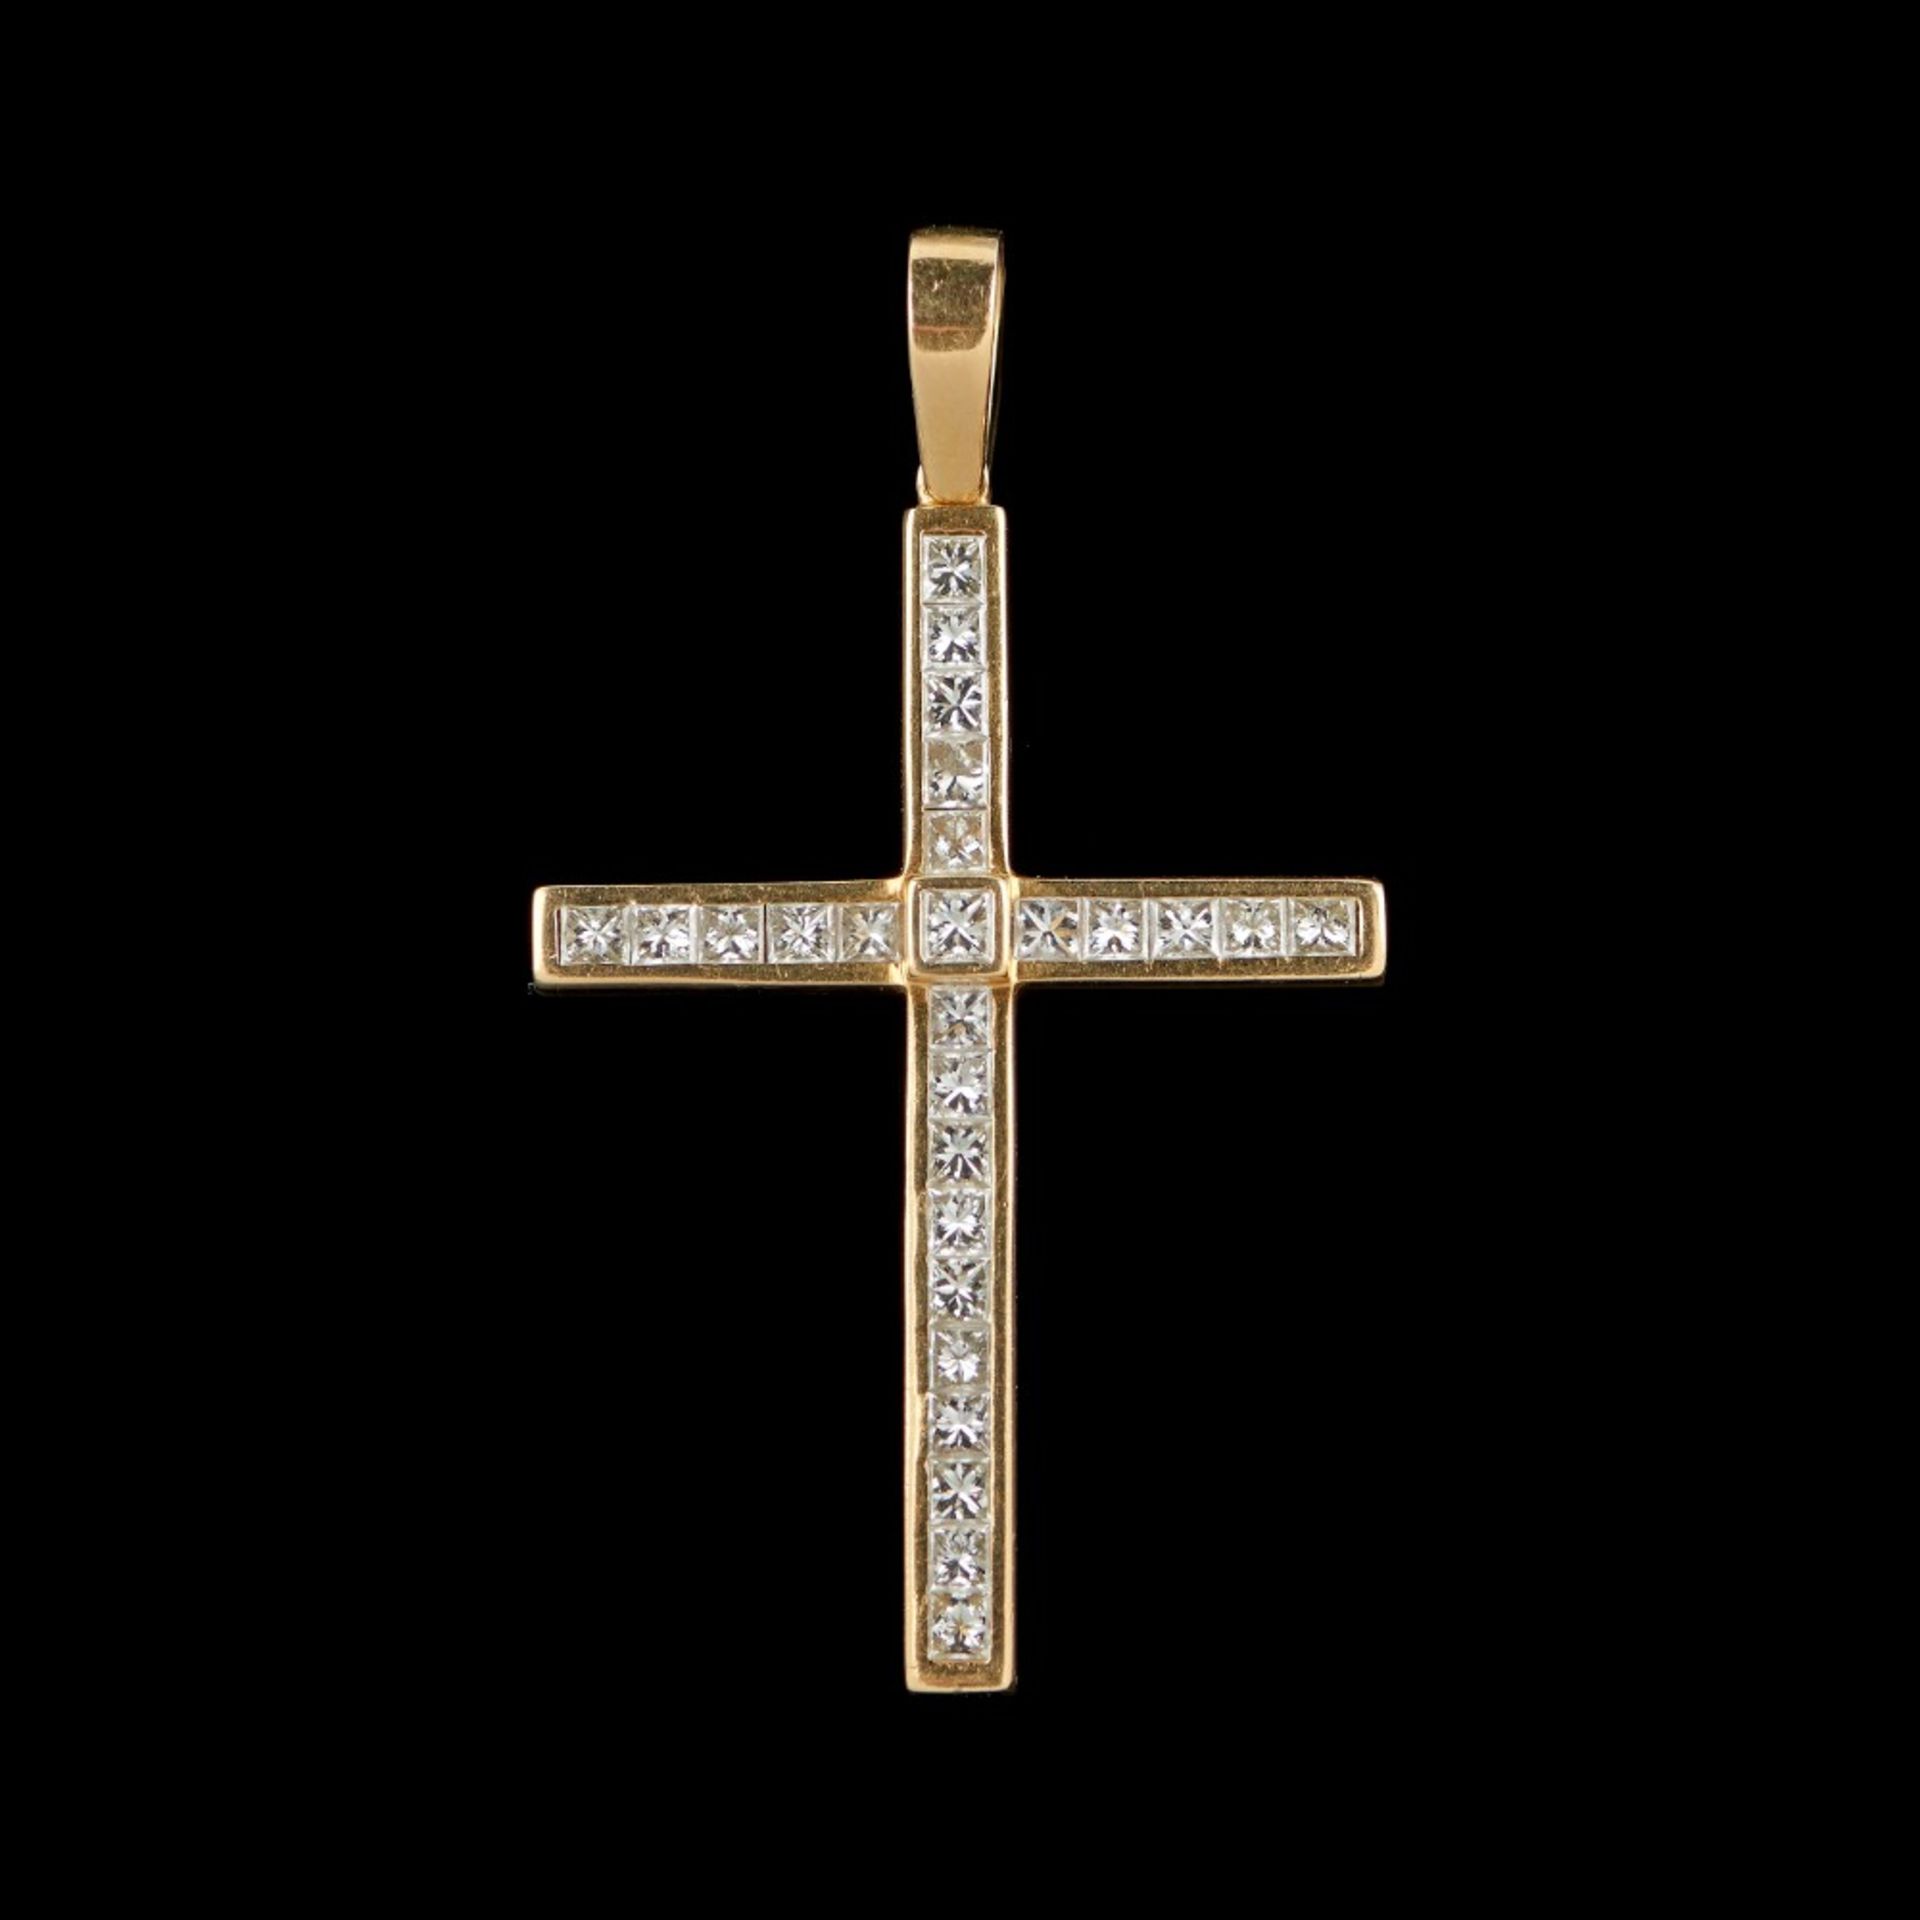  A cross pendant